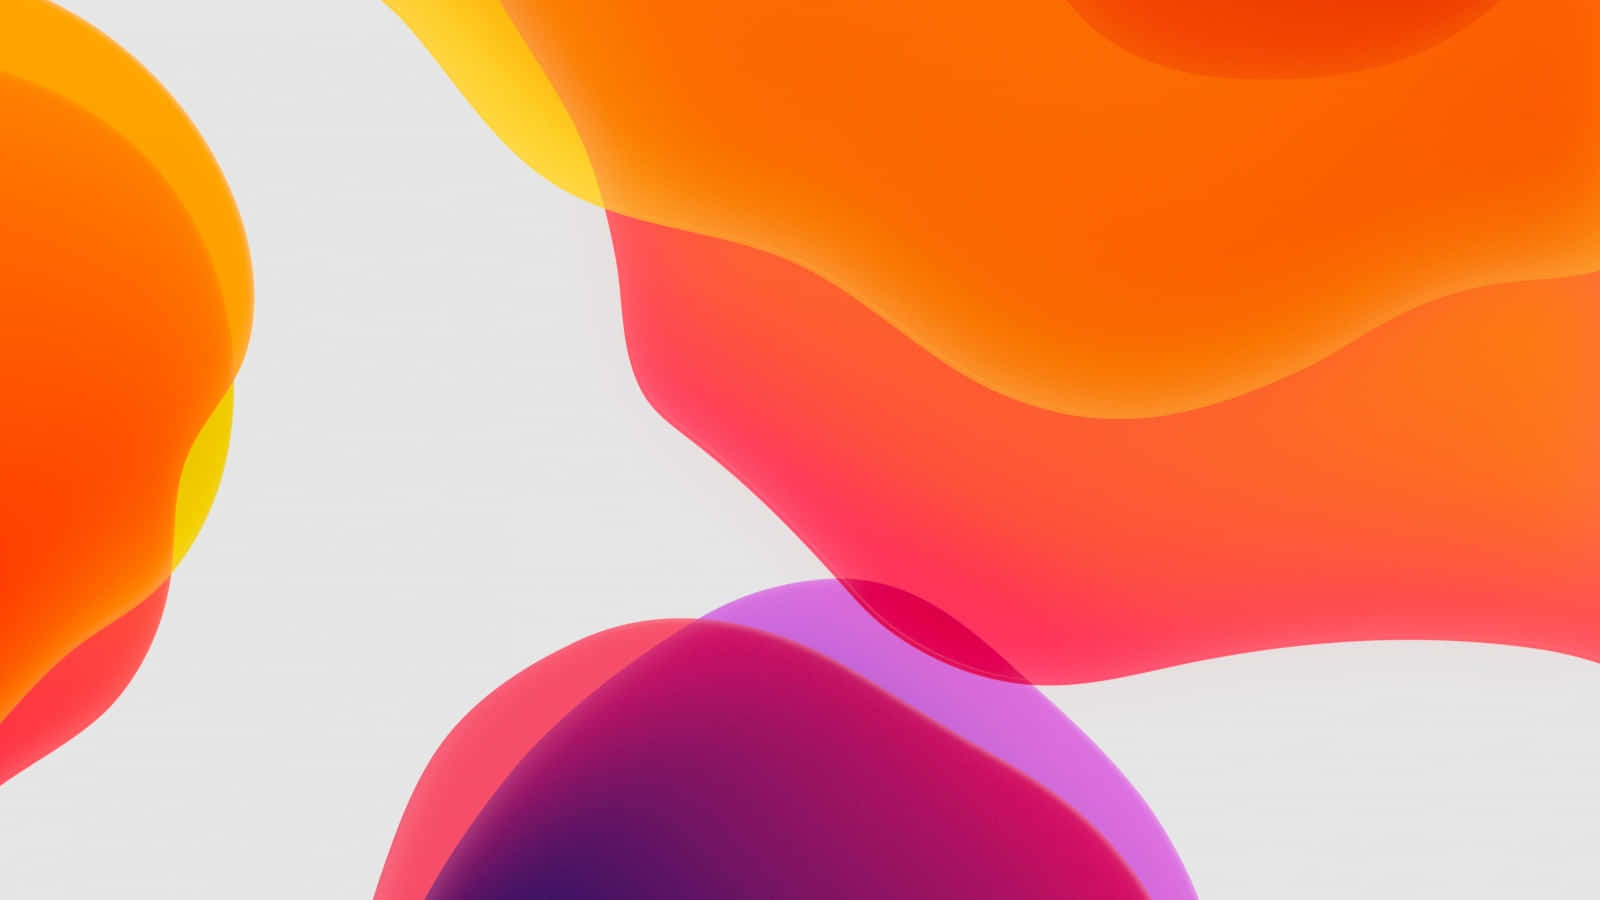 Standard Abstract Shapes For Desktop Wallpaper